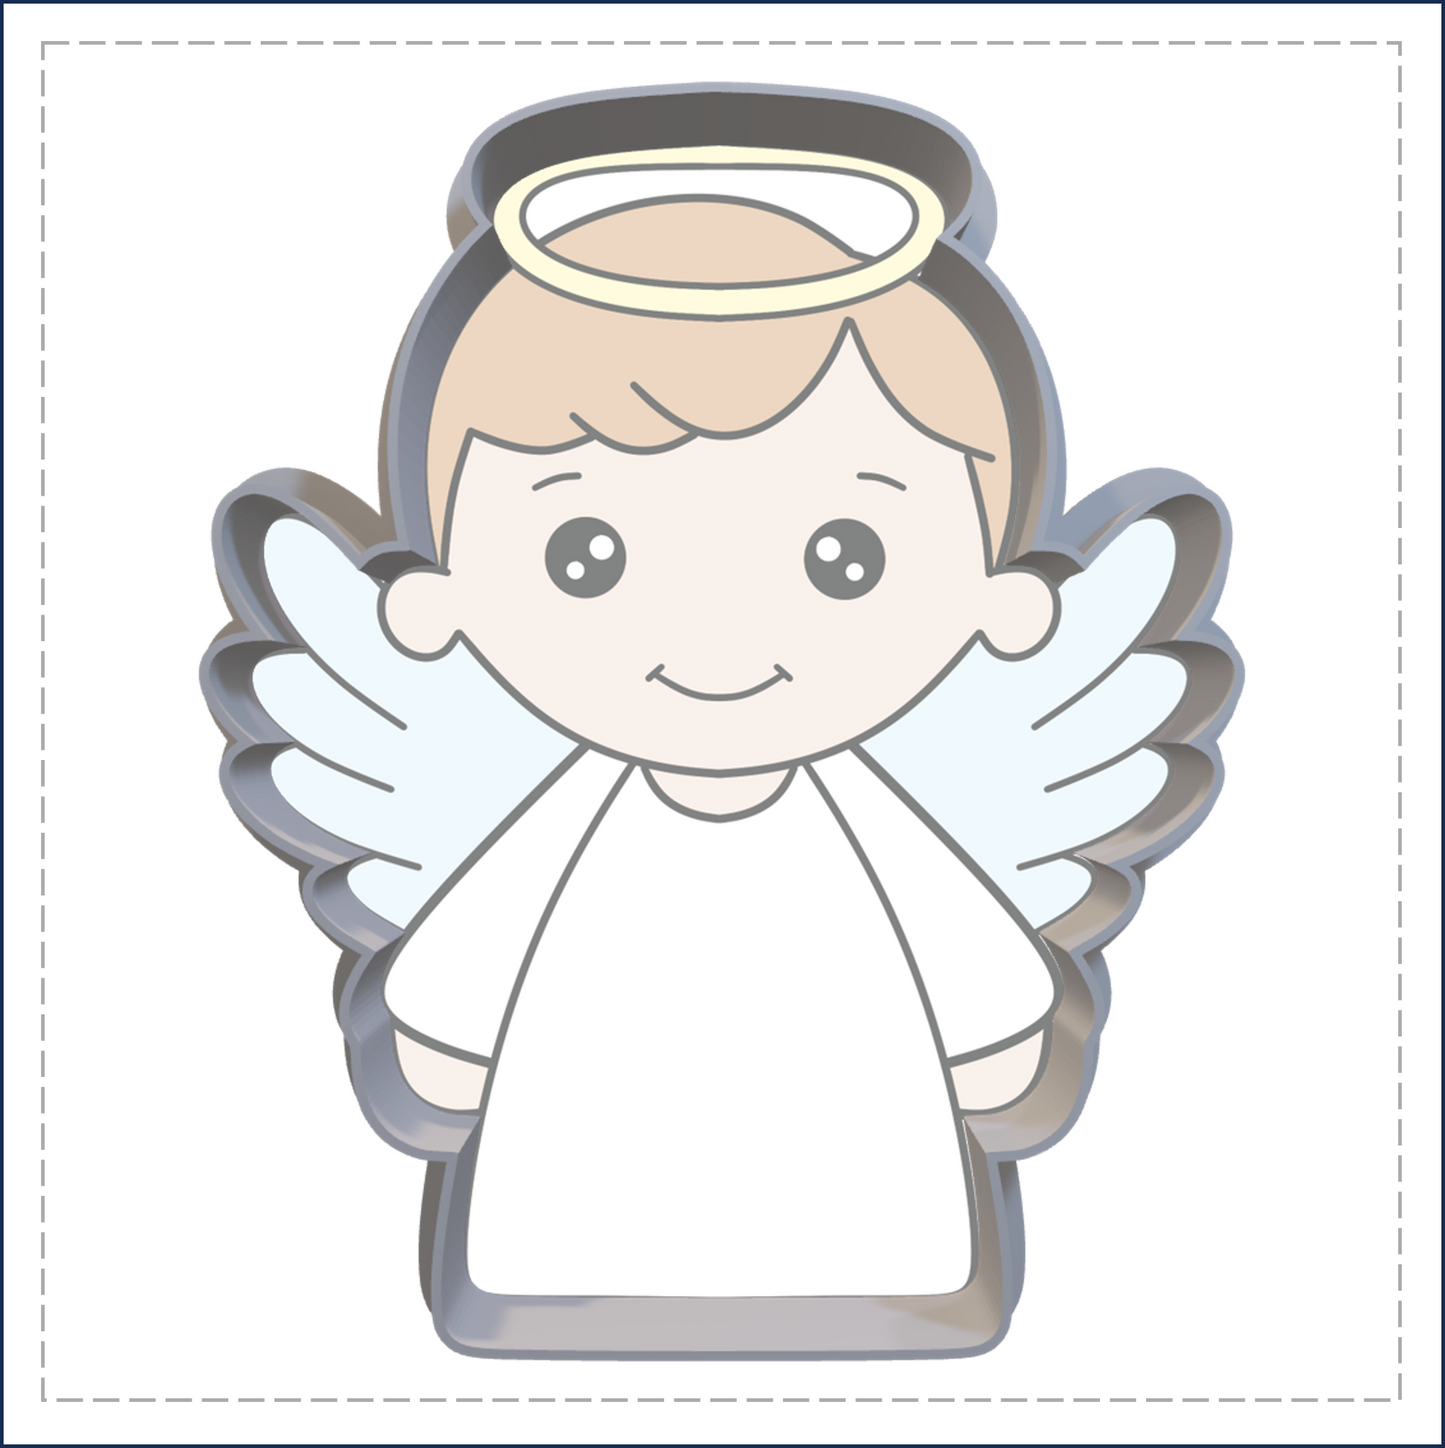 J179 - ANGEL COOKIE CUTTER